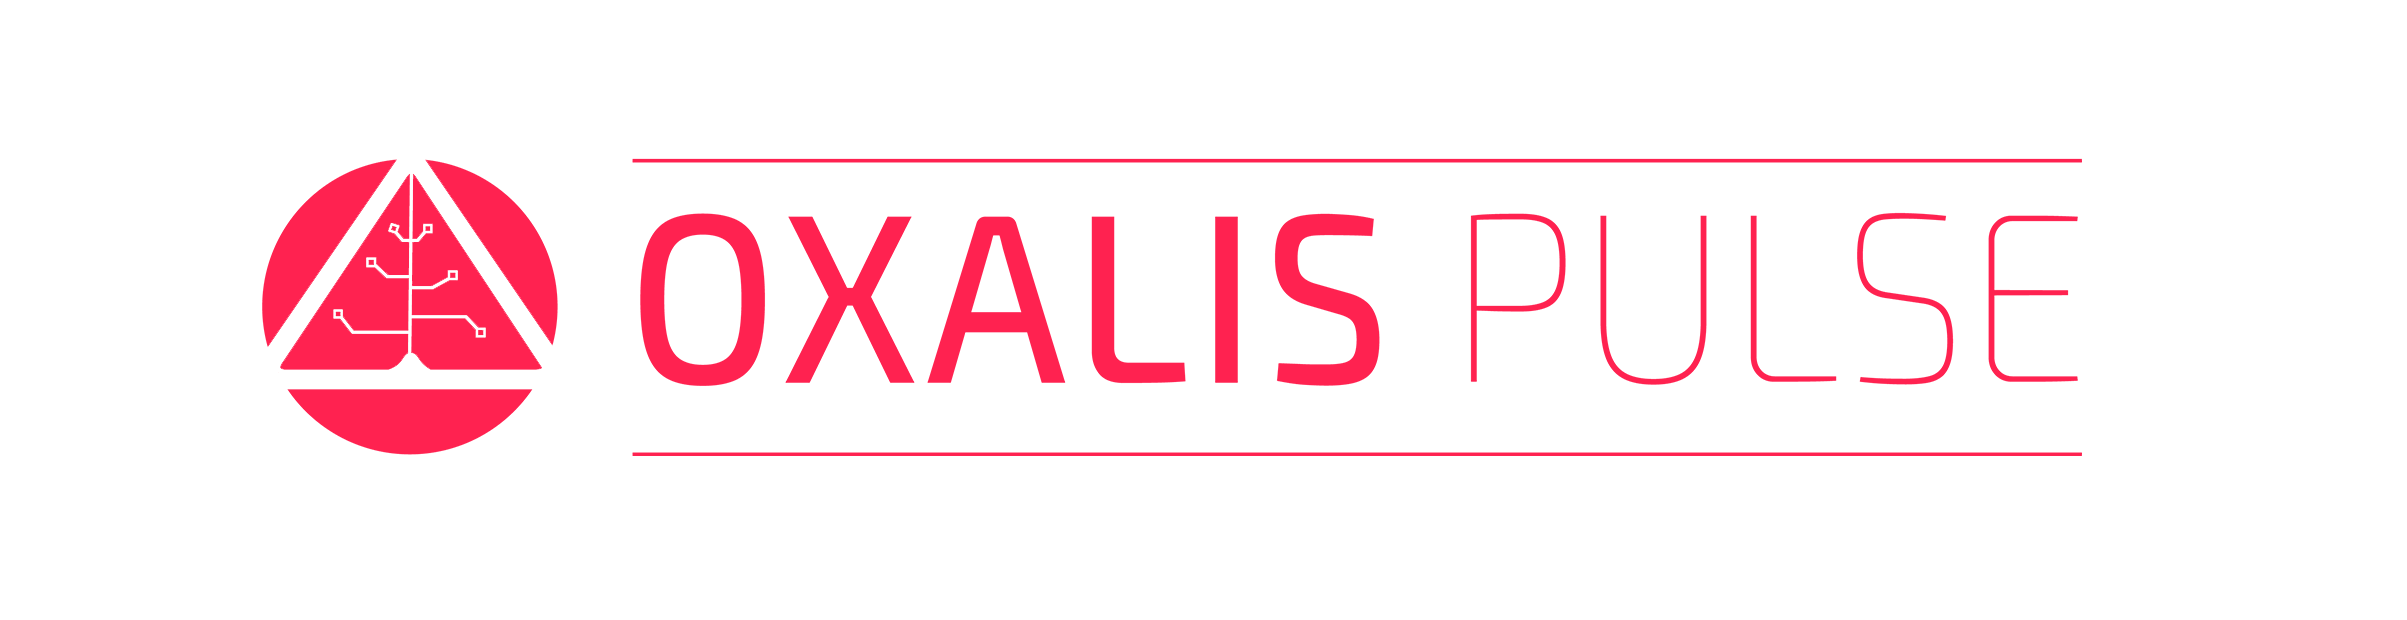 OxalisPulse Red Logo